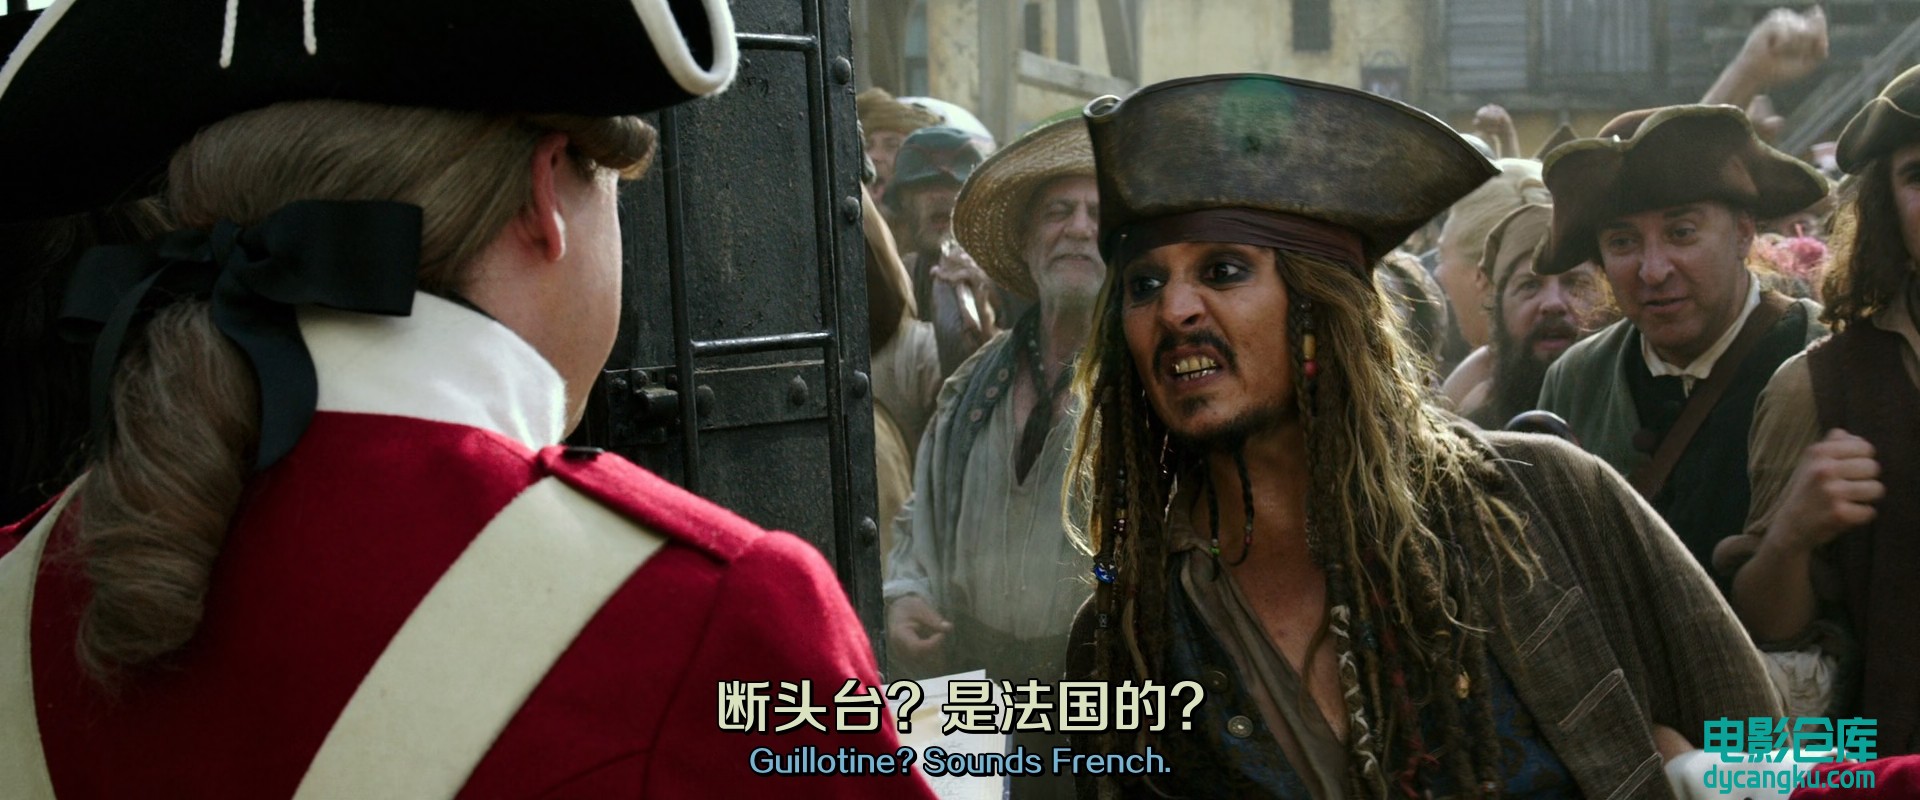 加勒比海盗5[电影仓库dycangku.com].Pirates.of.the.Caribbean.Dead.Men.Tell.No.Tale.jpg